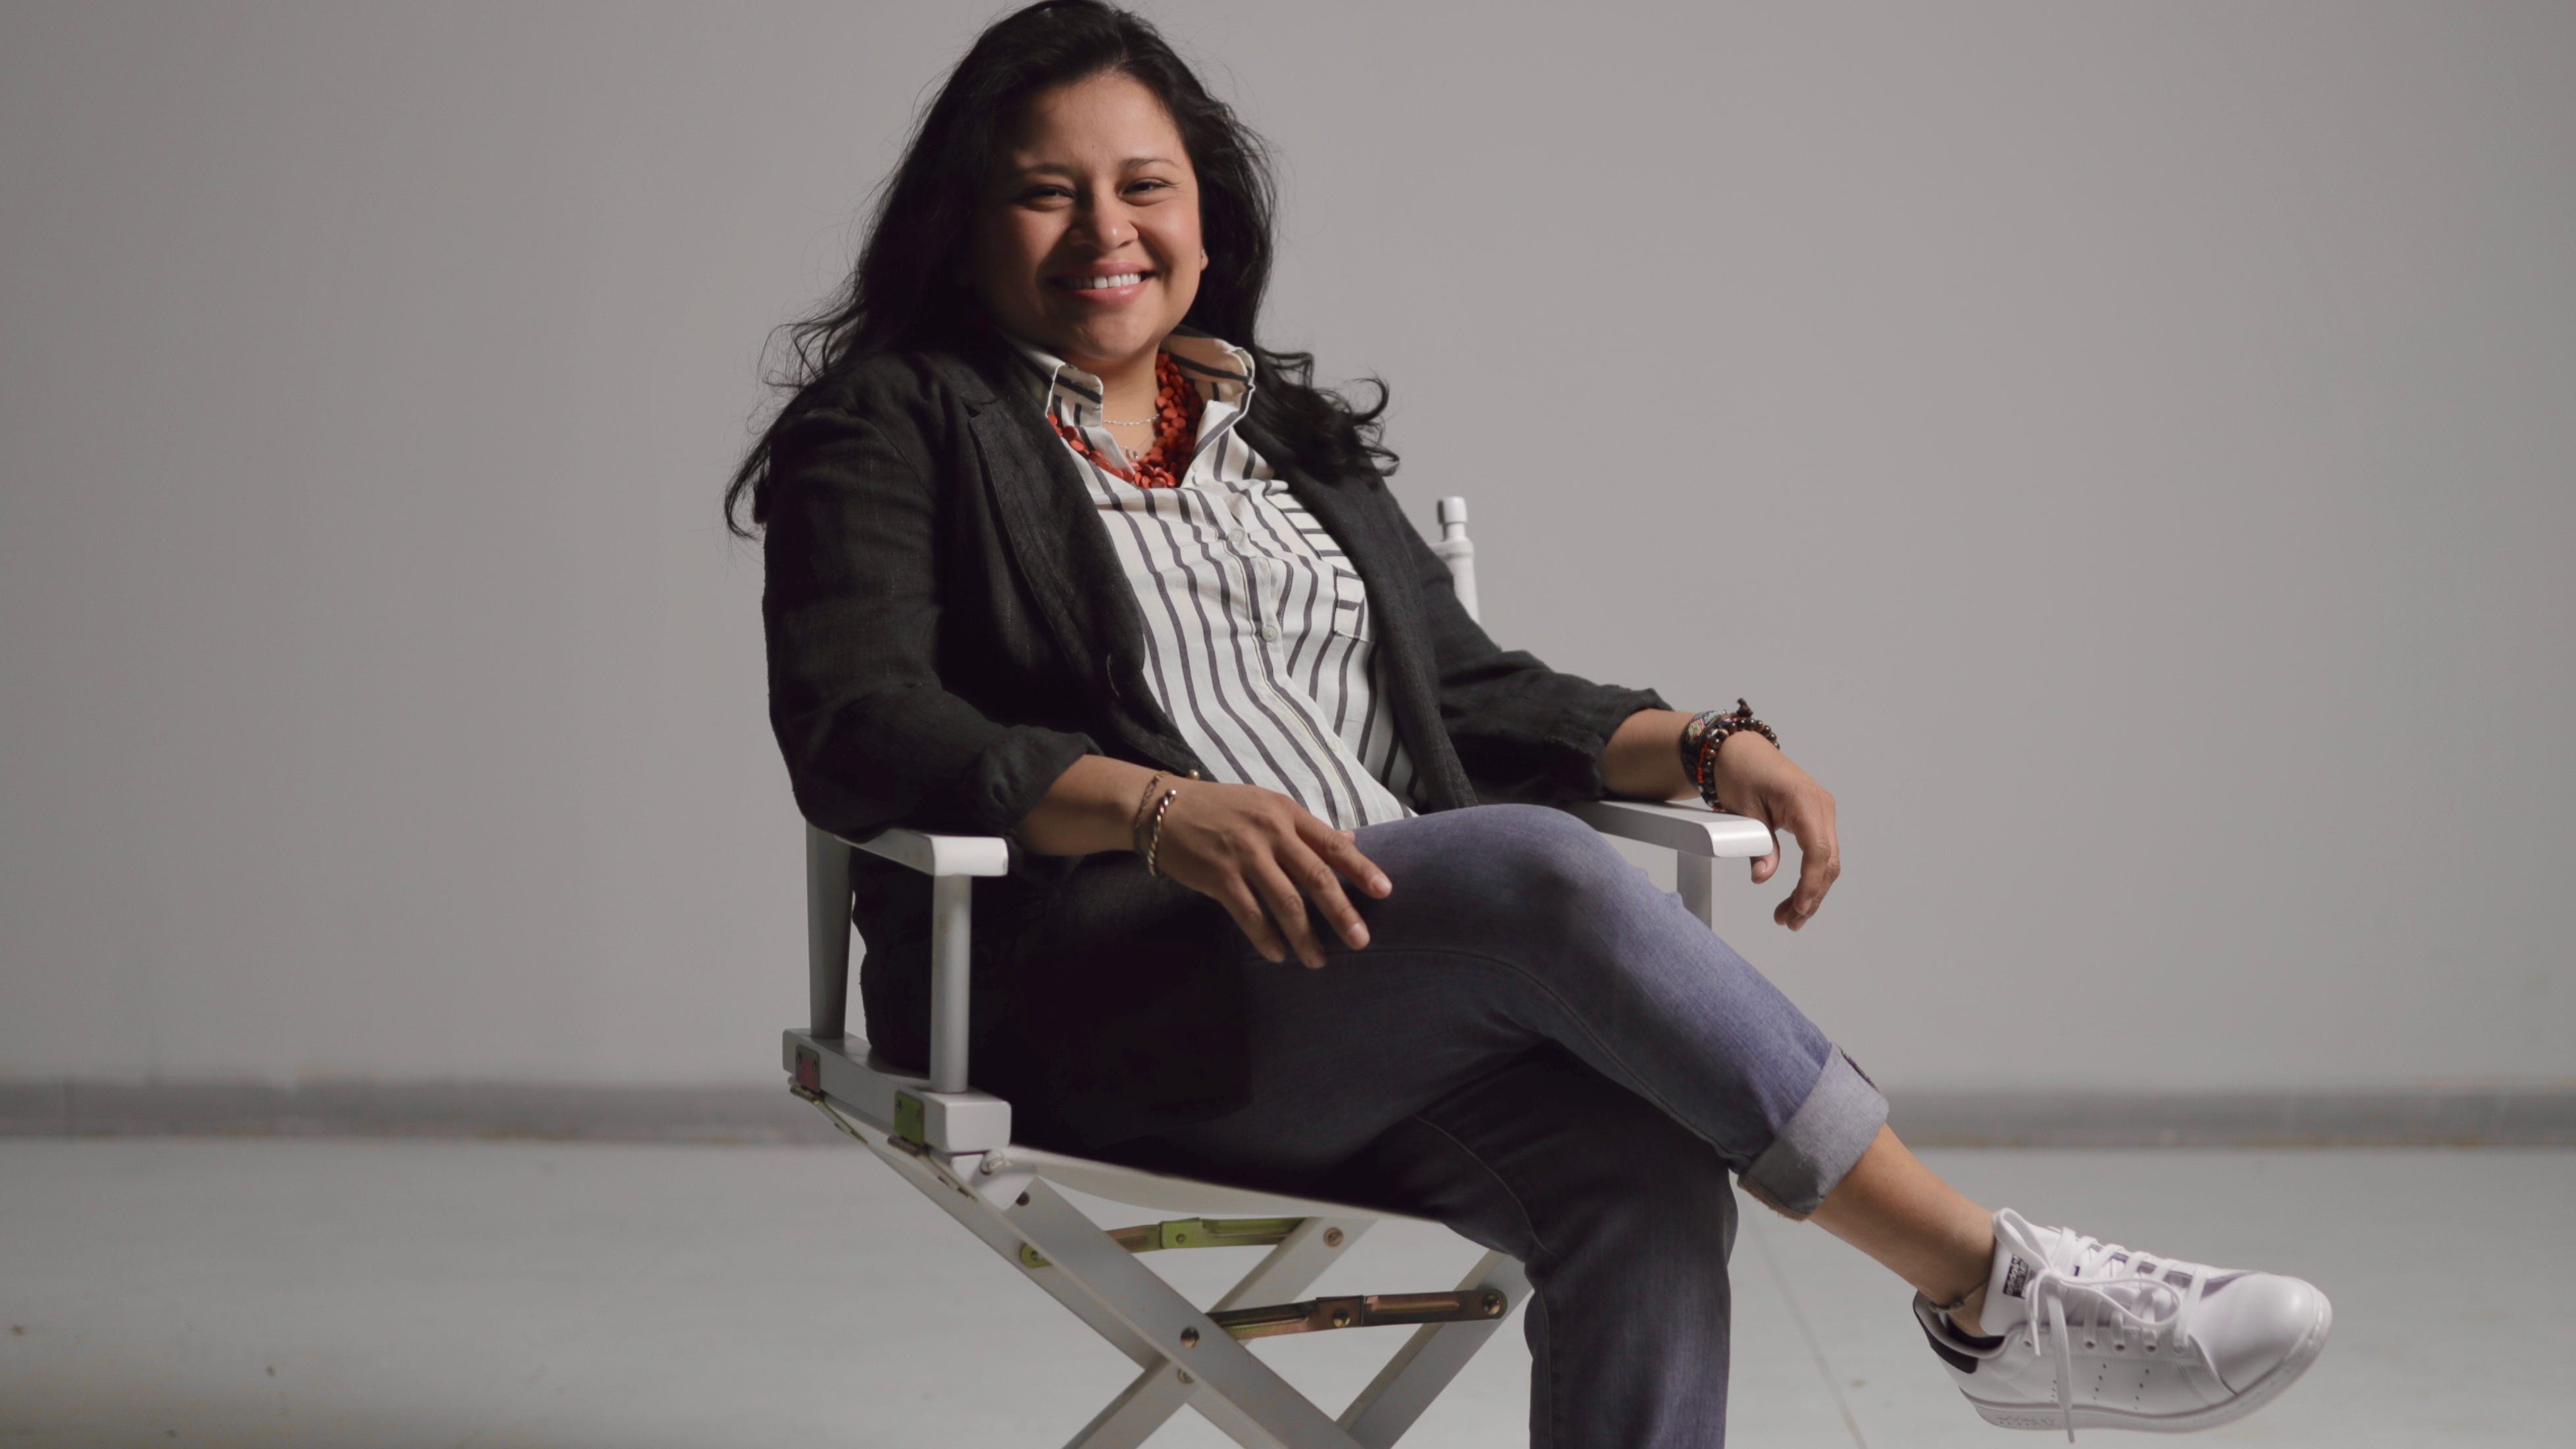 Pita Juarez combines her love of journalism, community to create films